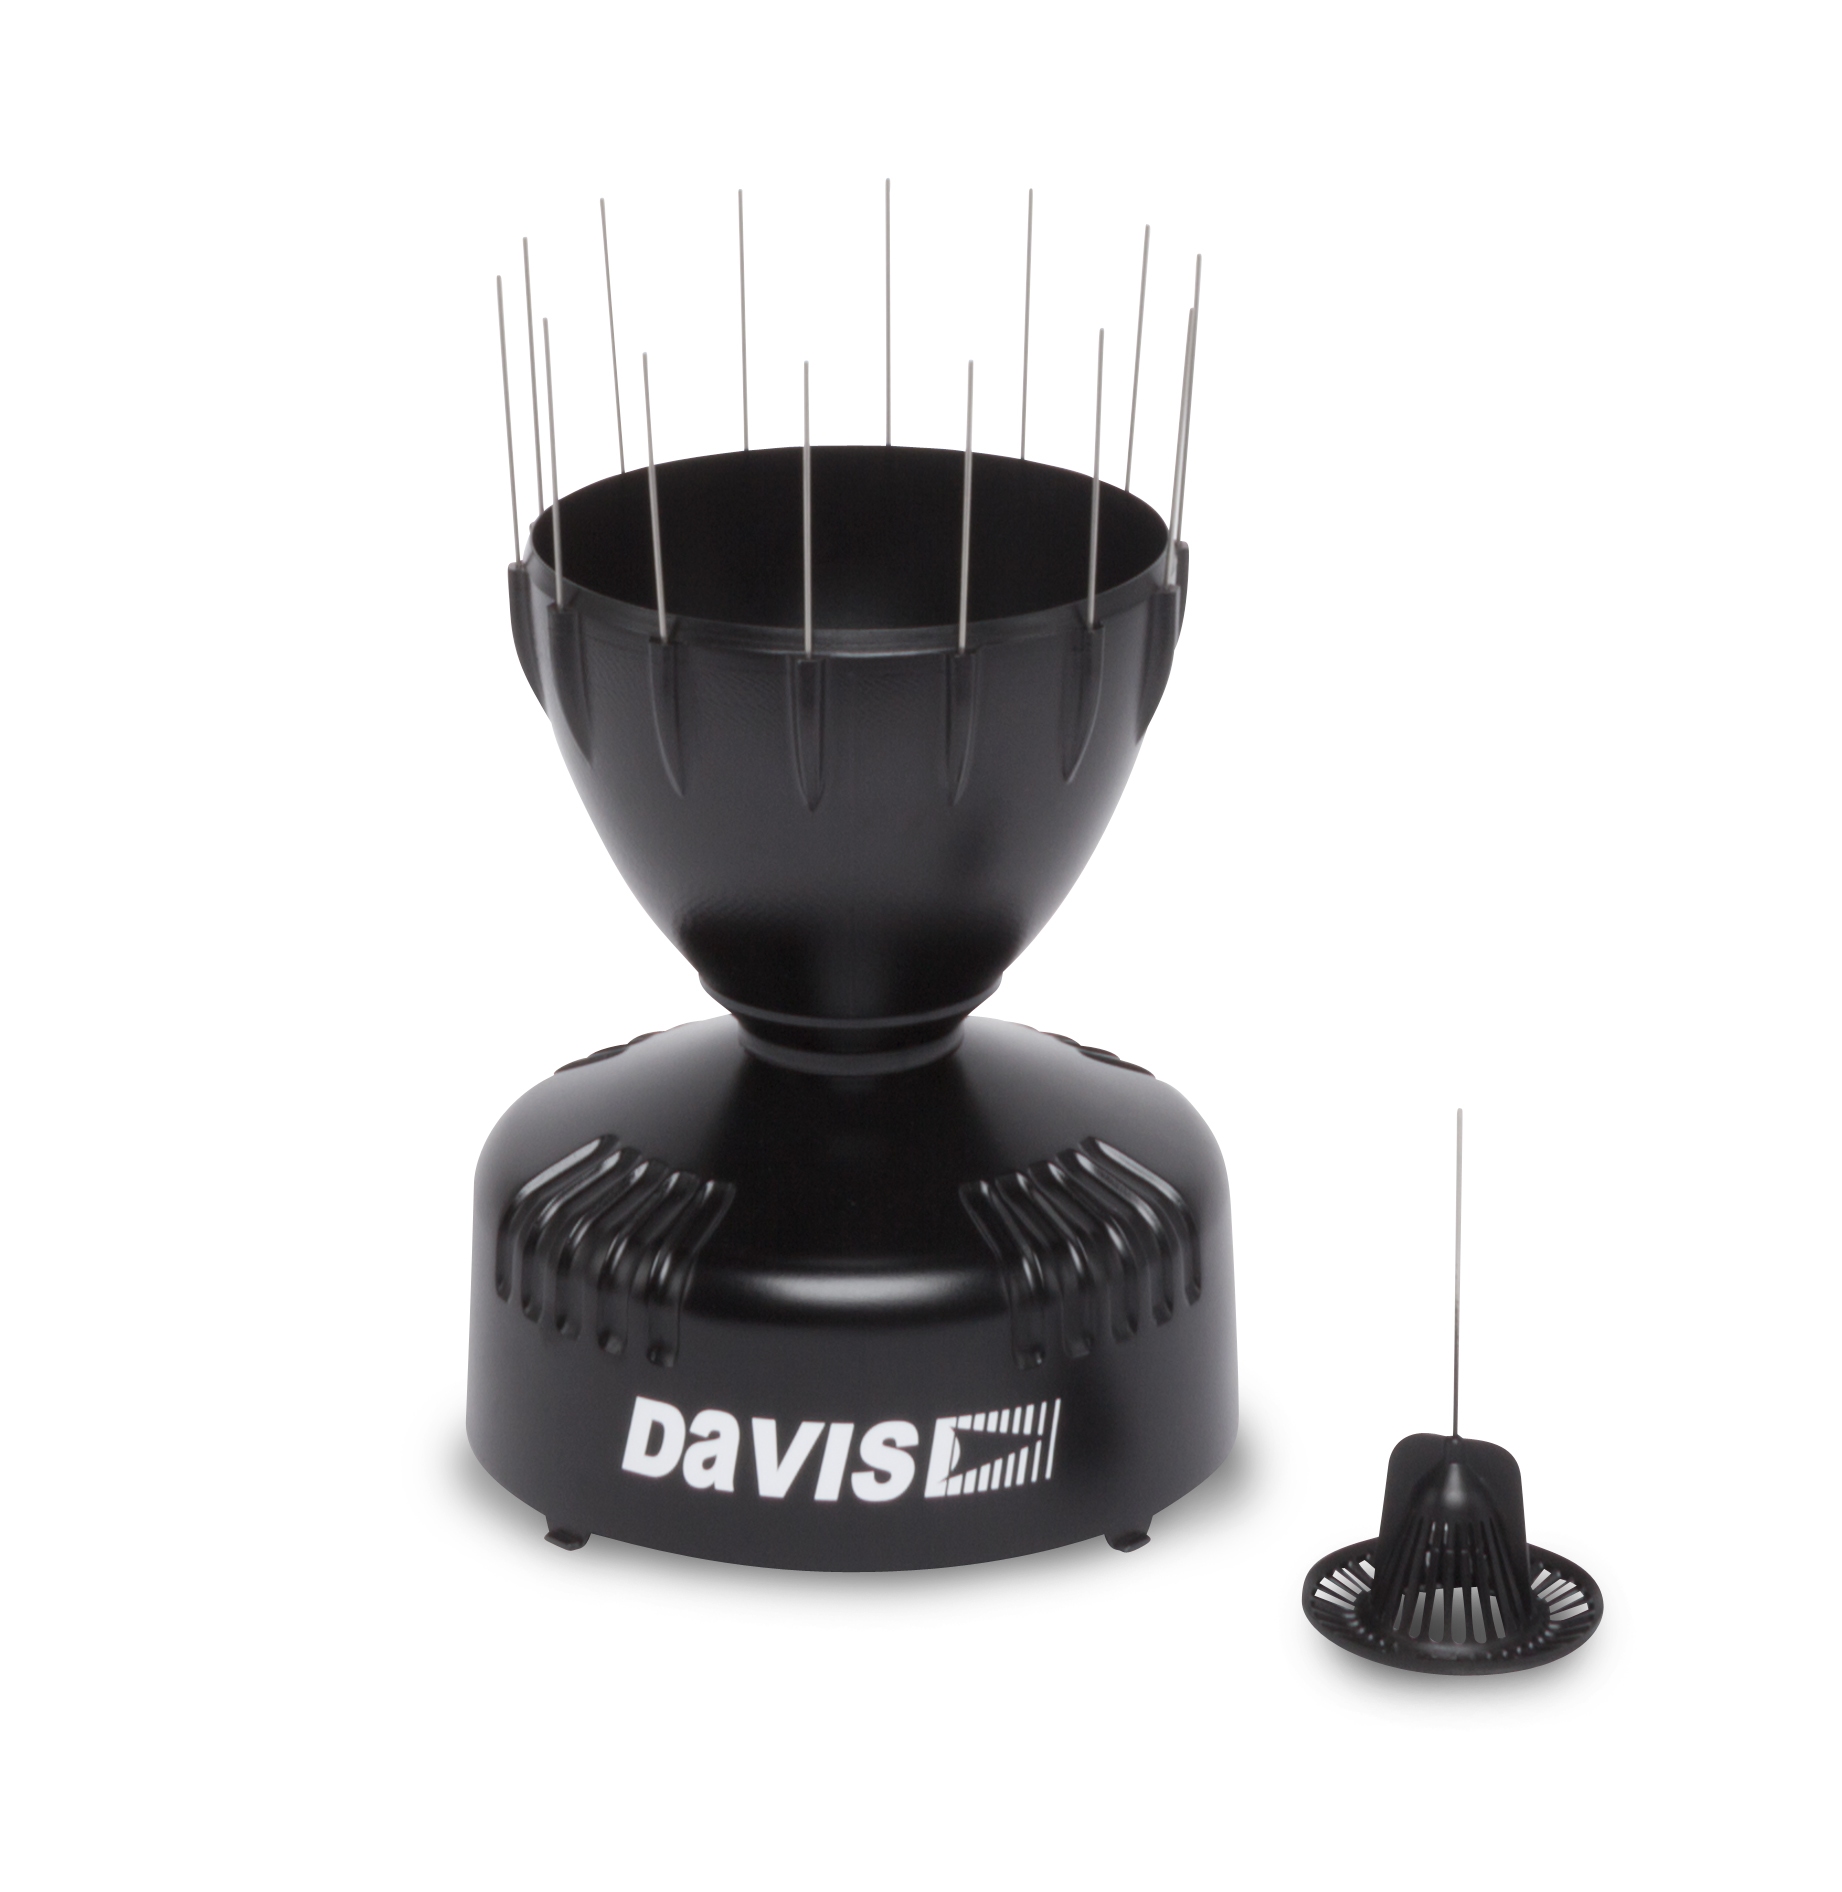 Davis 6262 Vantage Pro 2 Plus professional weather station